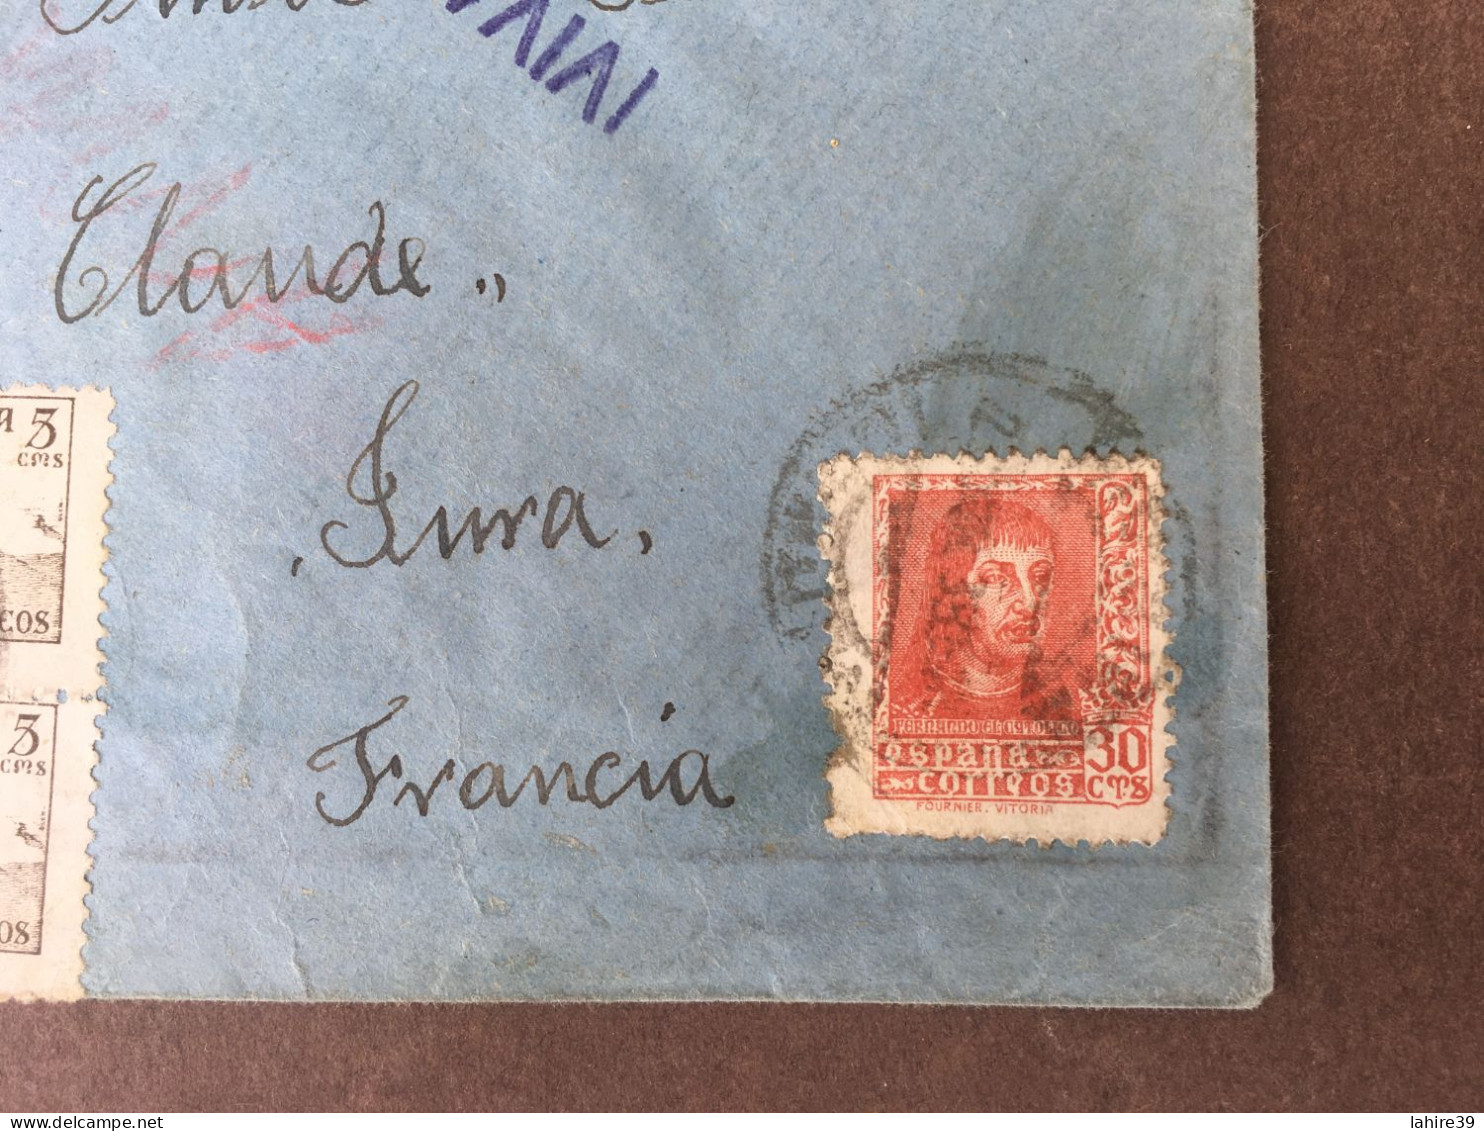 Enveloppe Timbrée / Censure Militaire / Iviva Espana / Espagne / 1938 - Storia Postale